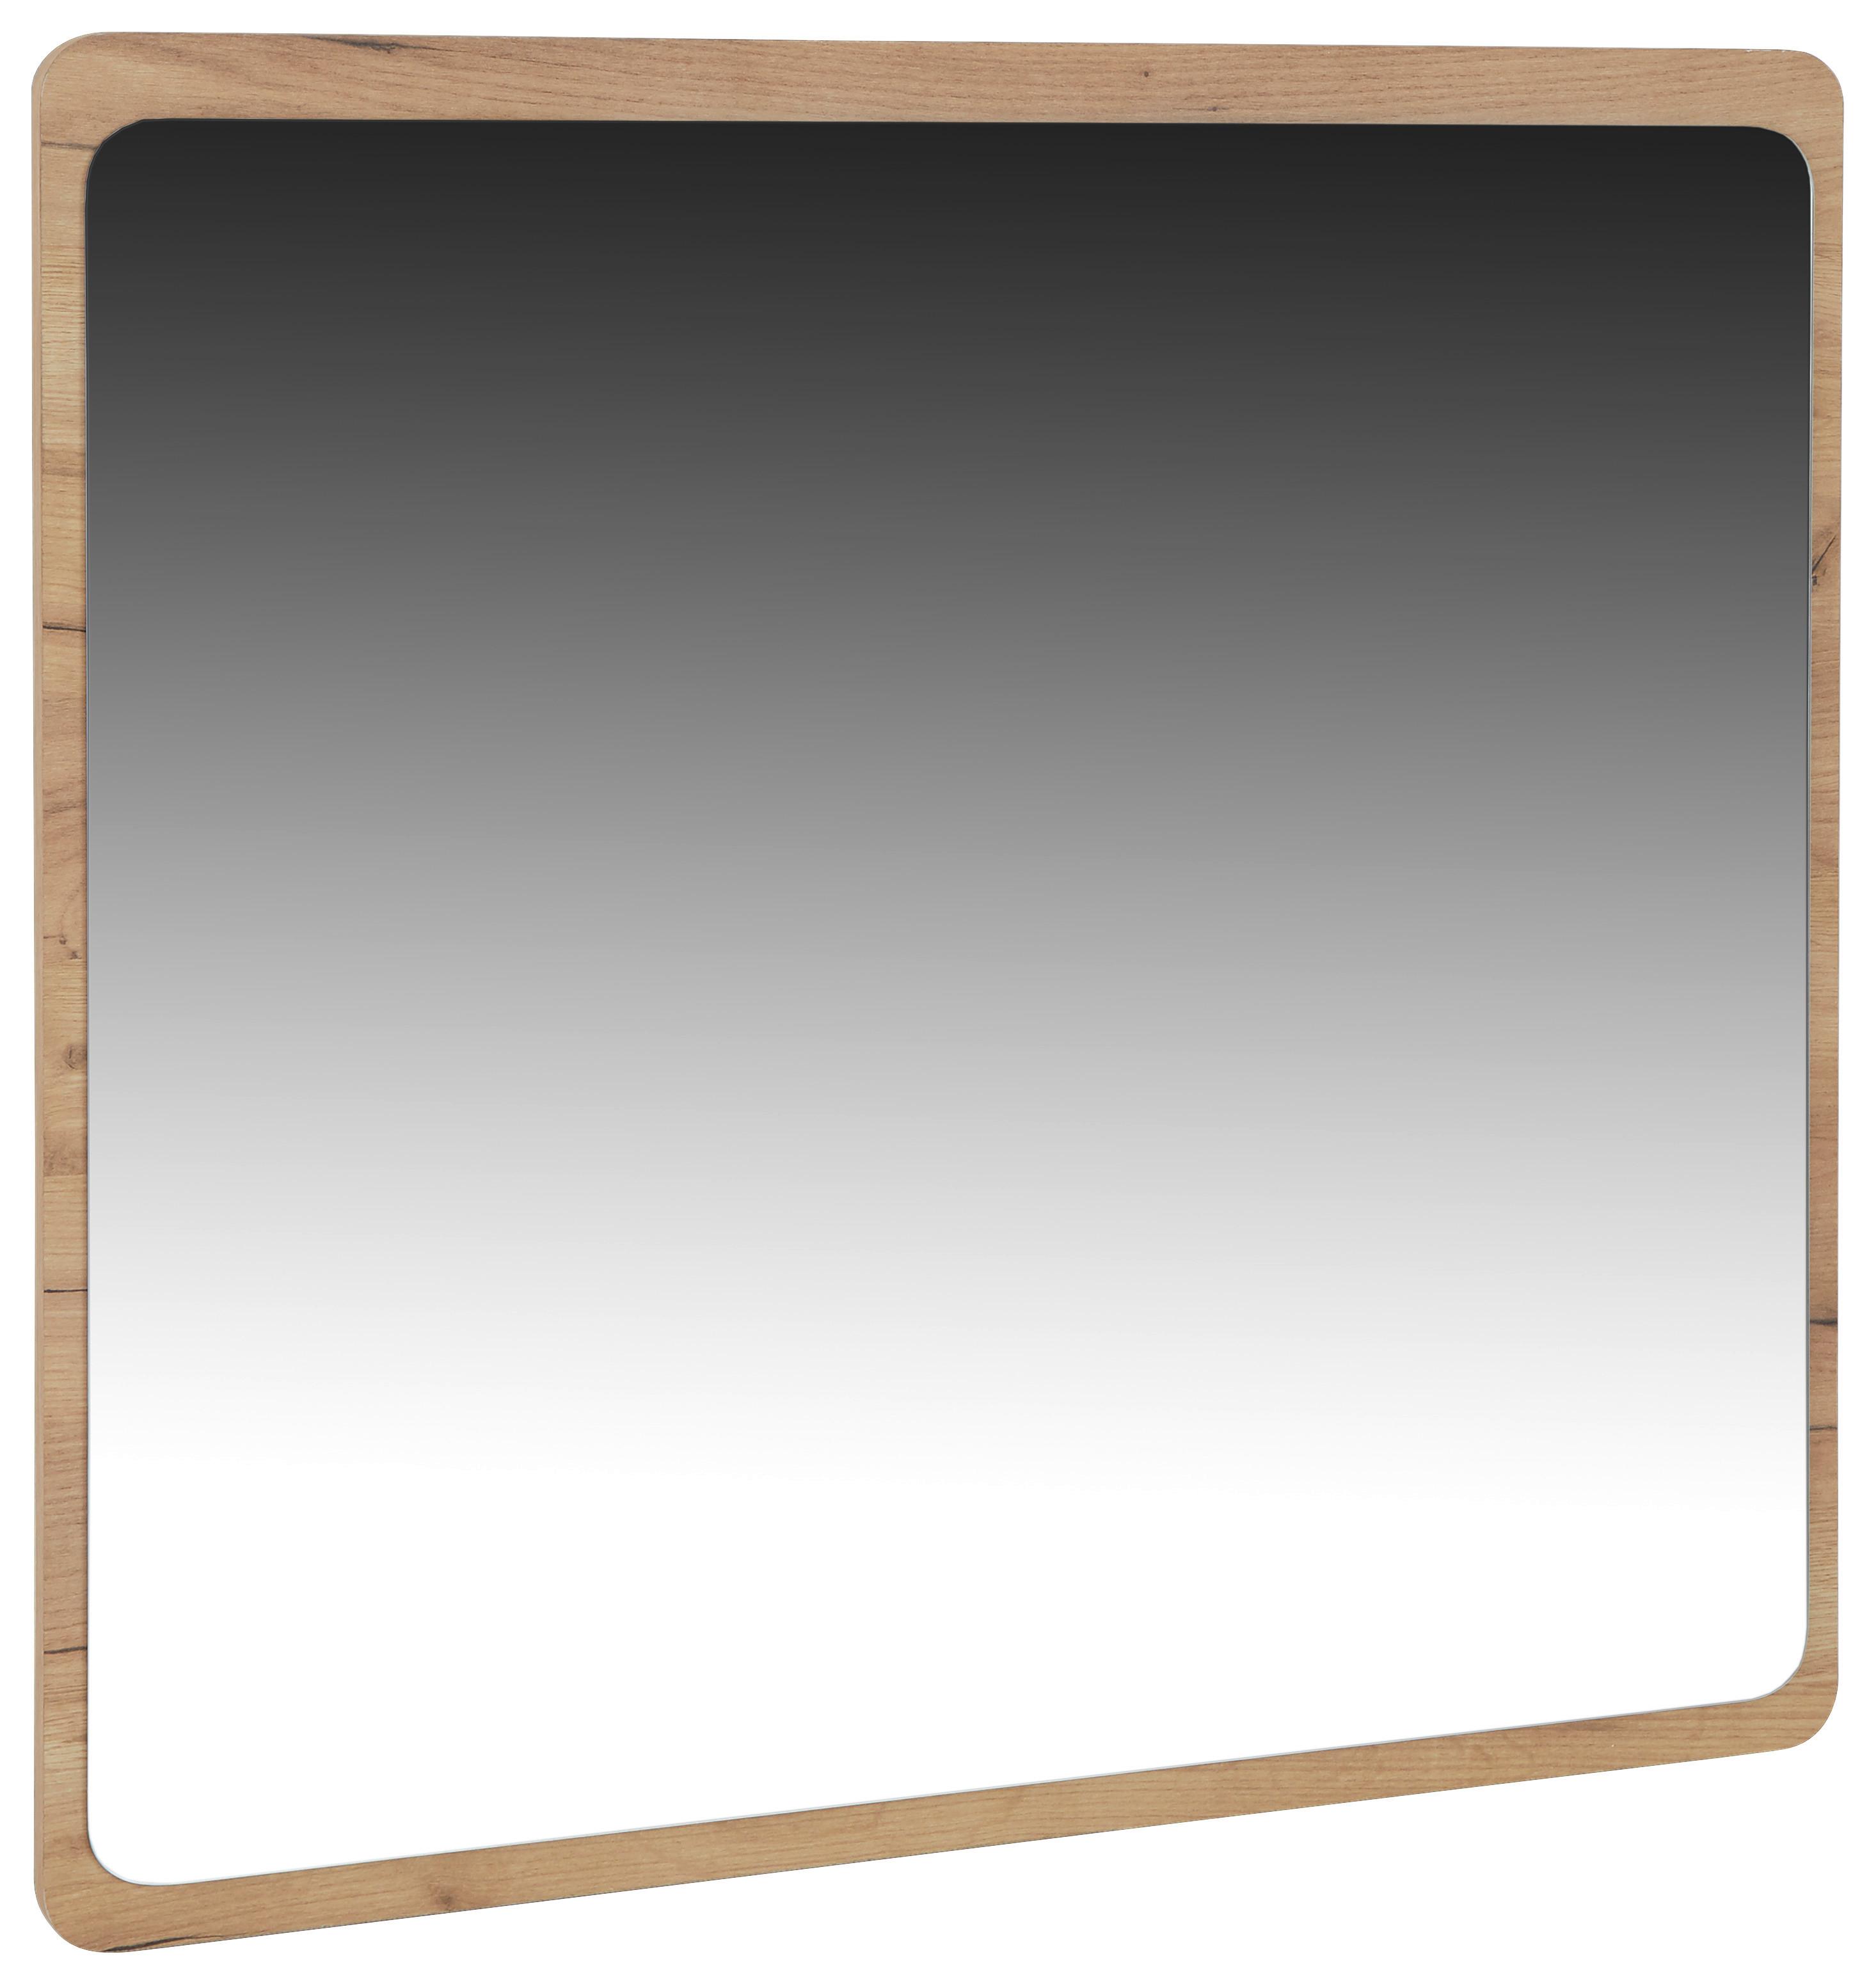 Ogledalo Fontana - boje hrasta, Modern, drvni materijal (84/83/2cm)